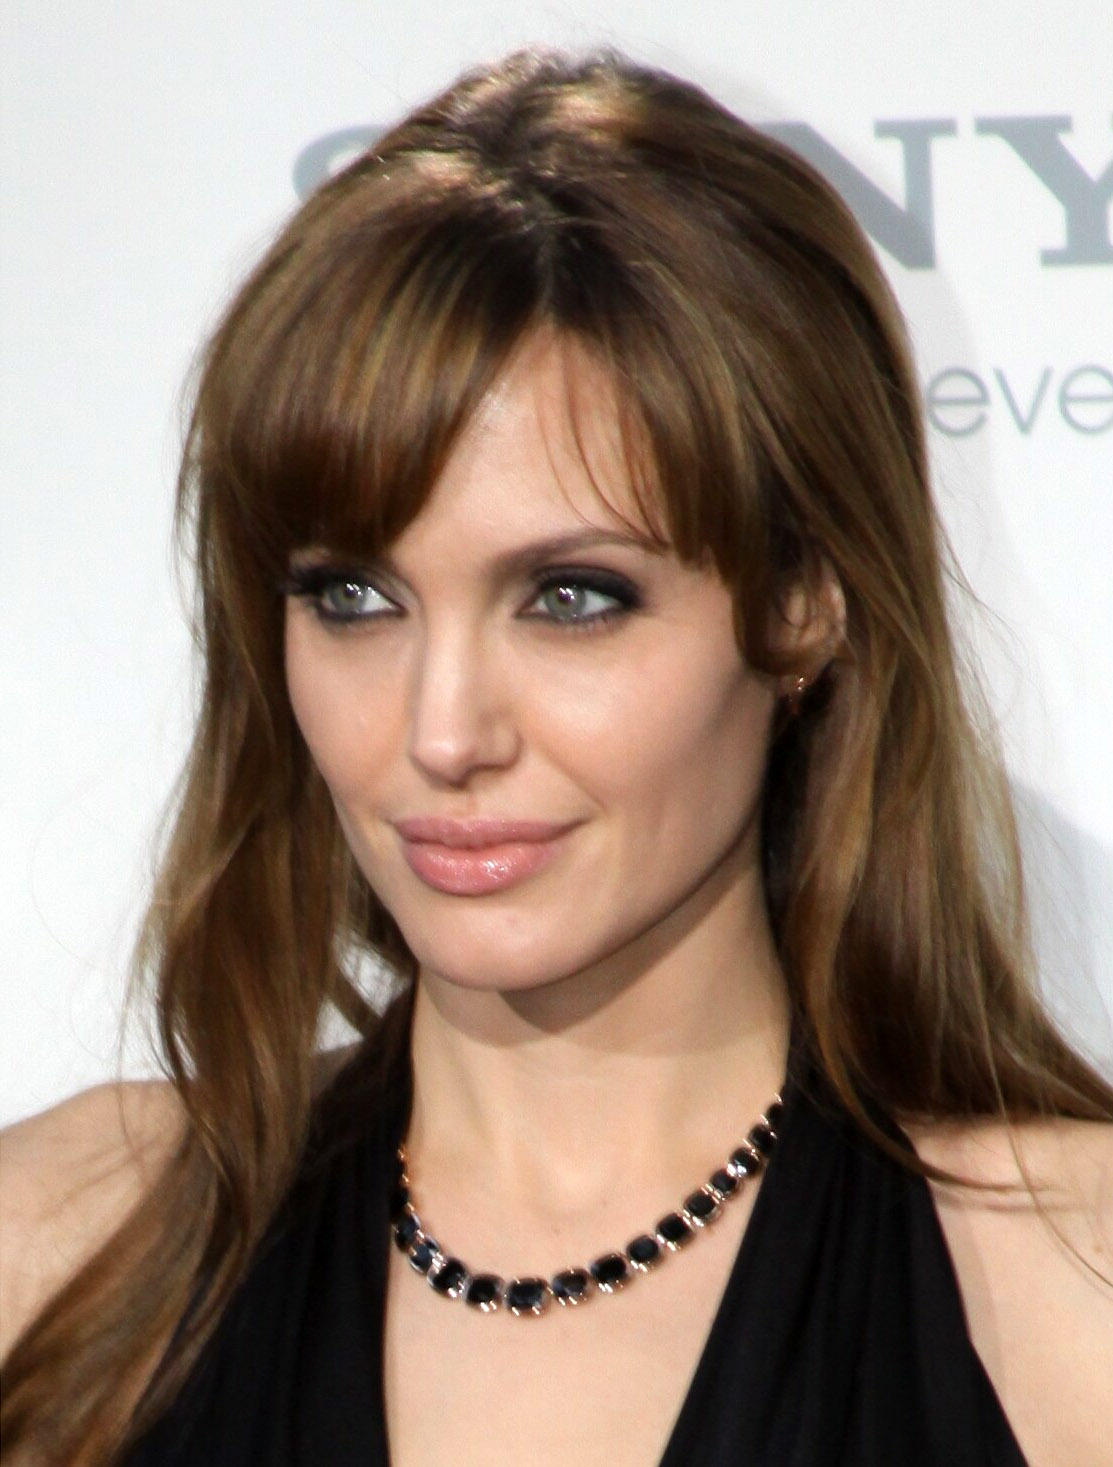 http://upload.wikimedia.org/wikipedia/commons/c/cc/Angelina-Jolie_cropped.jpg